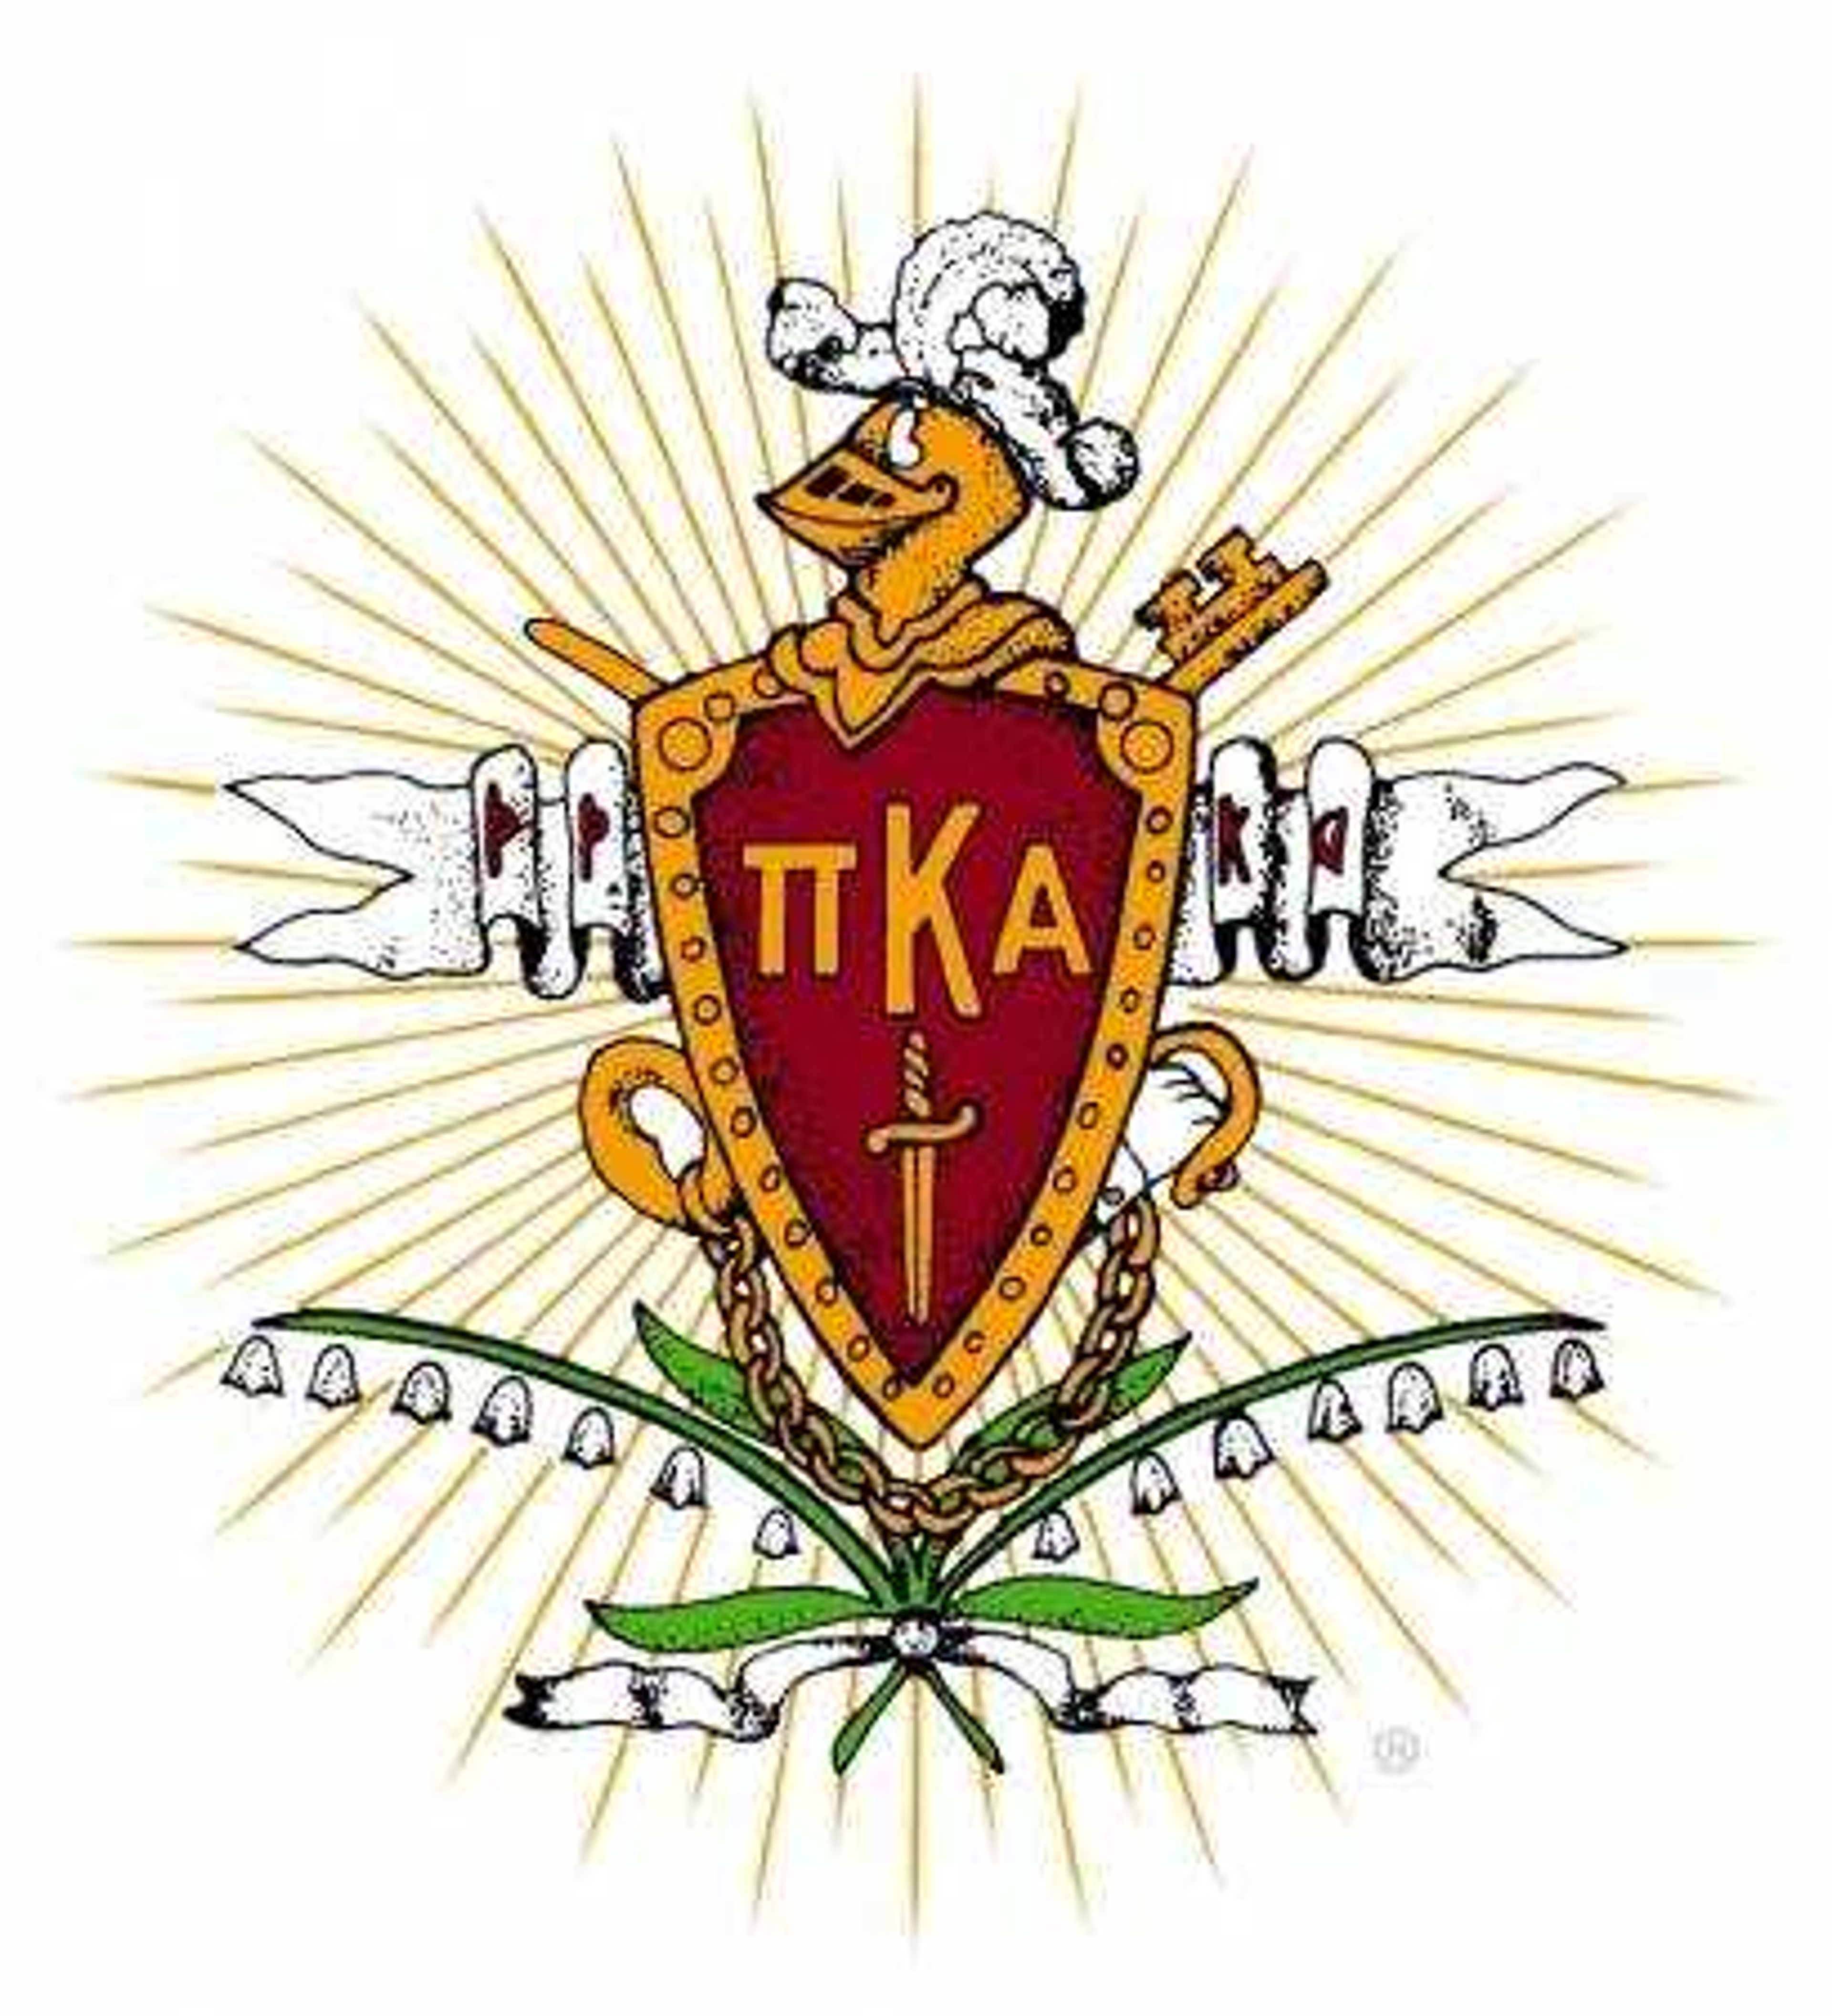 Pi Kappa Alpha suspended for multiple violations